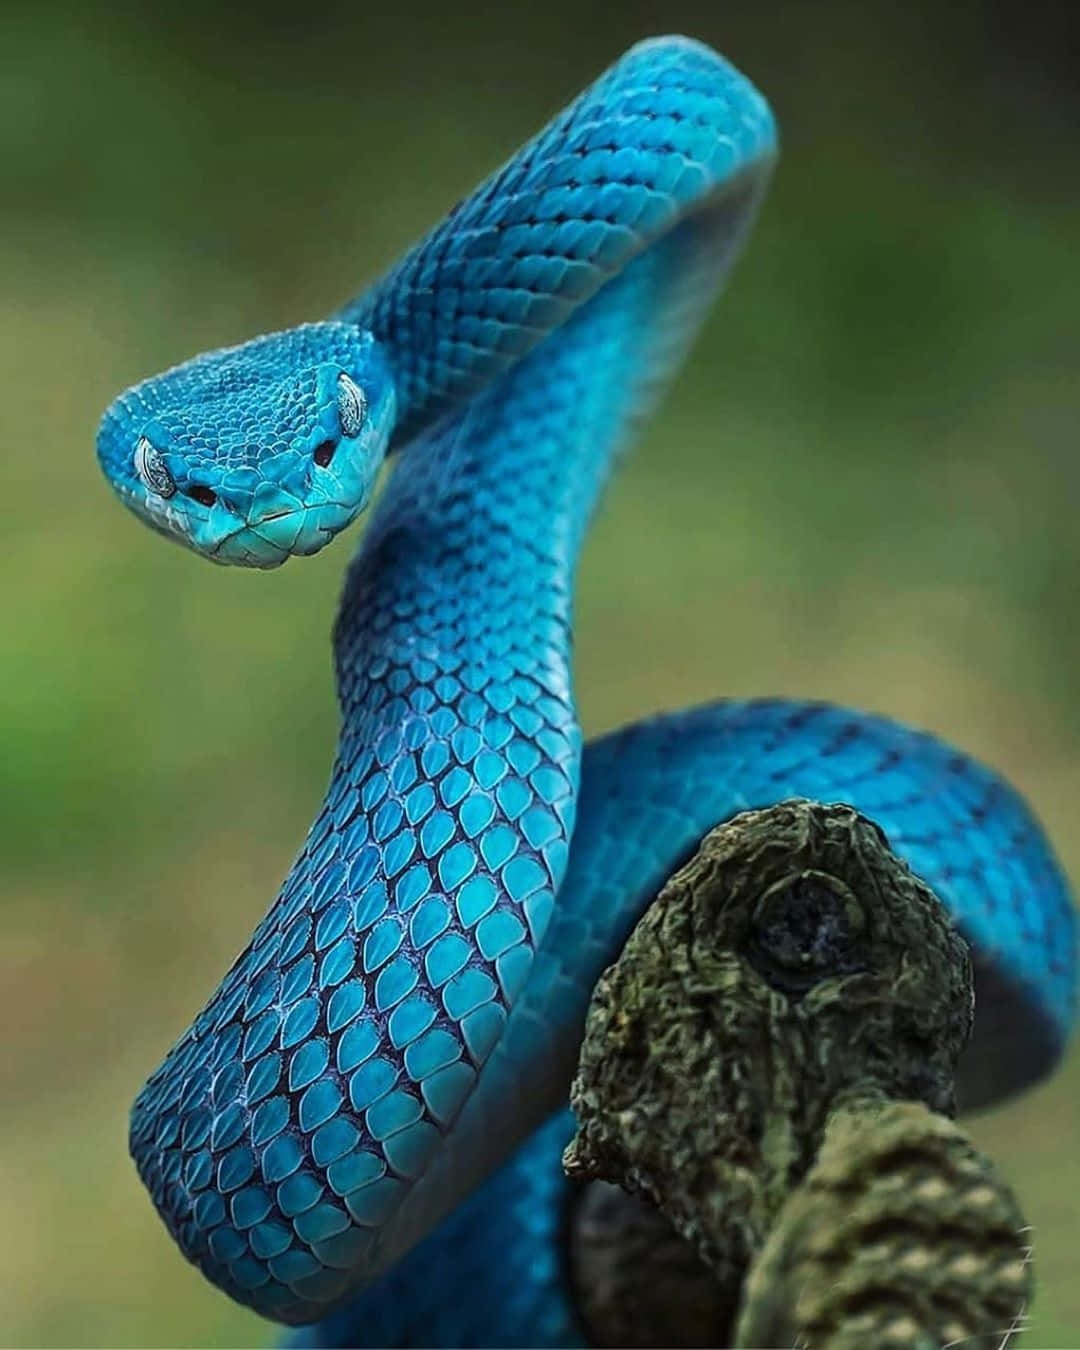 A fierce and frightening snake lies in wait